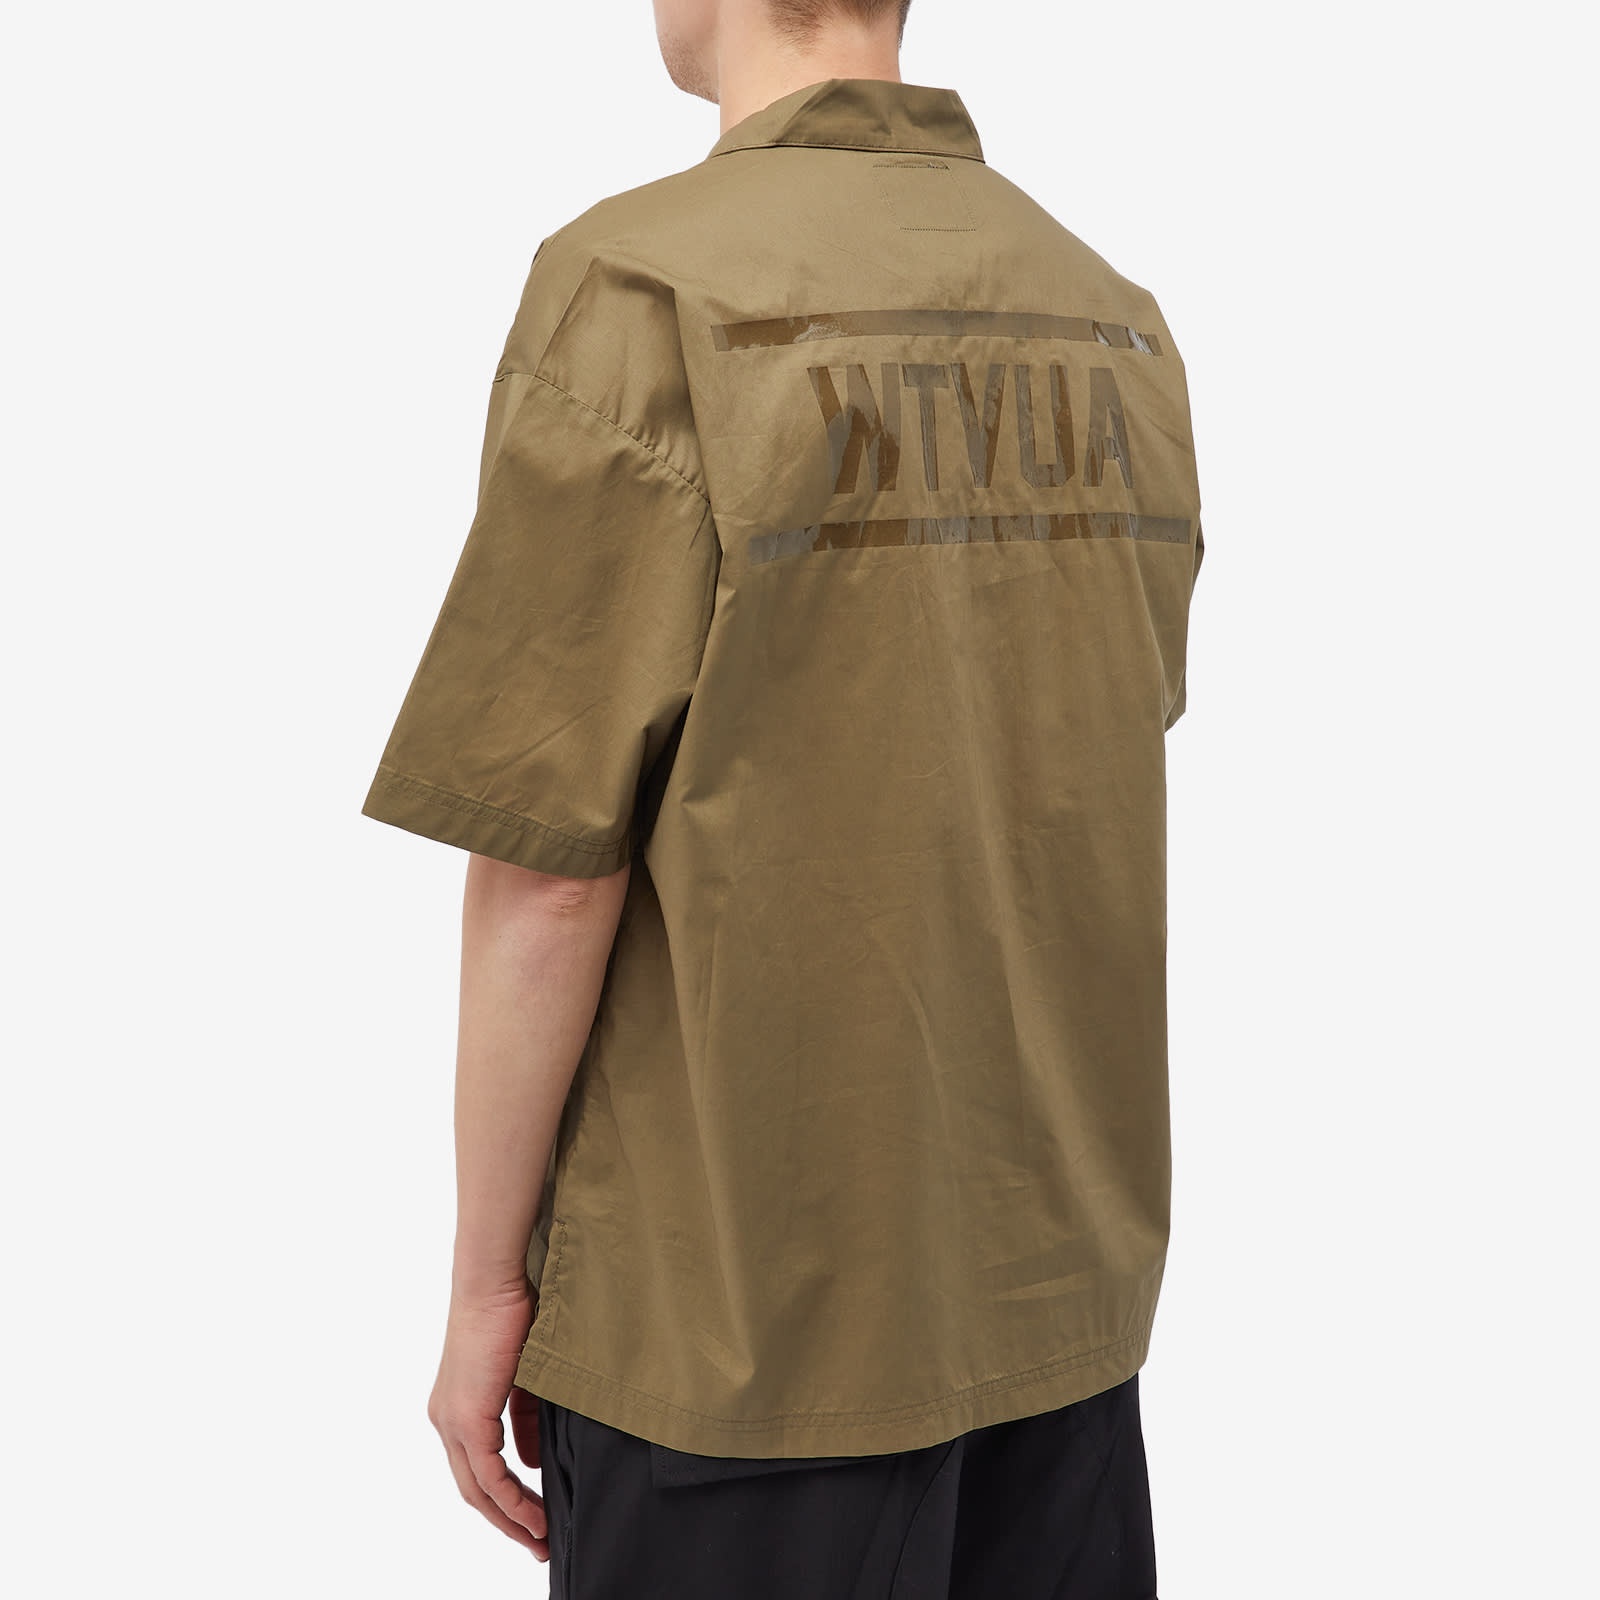 WTAPS 03 WTVUA Short Sleeve Back Print Shirt - 3